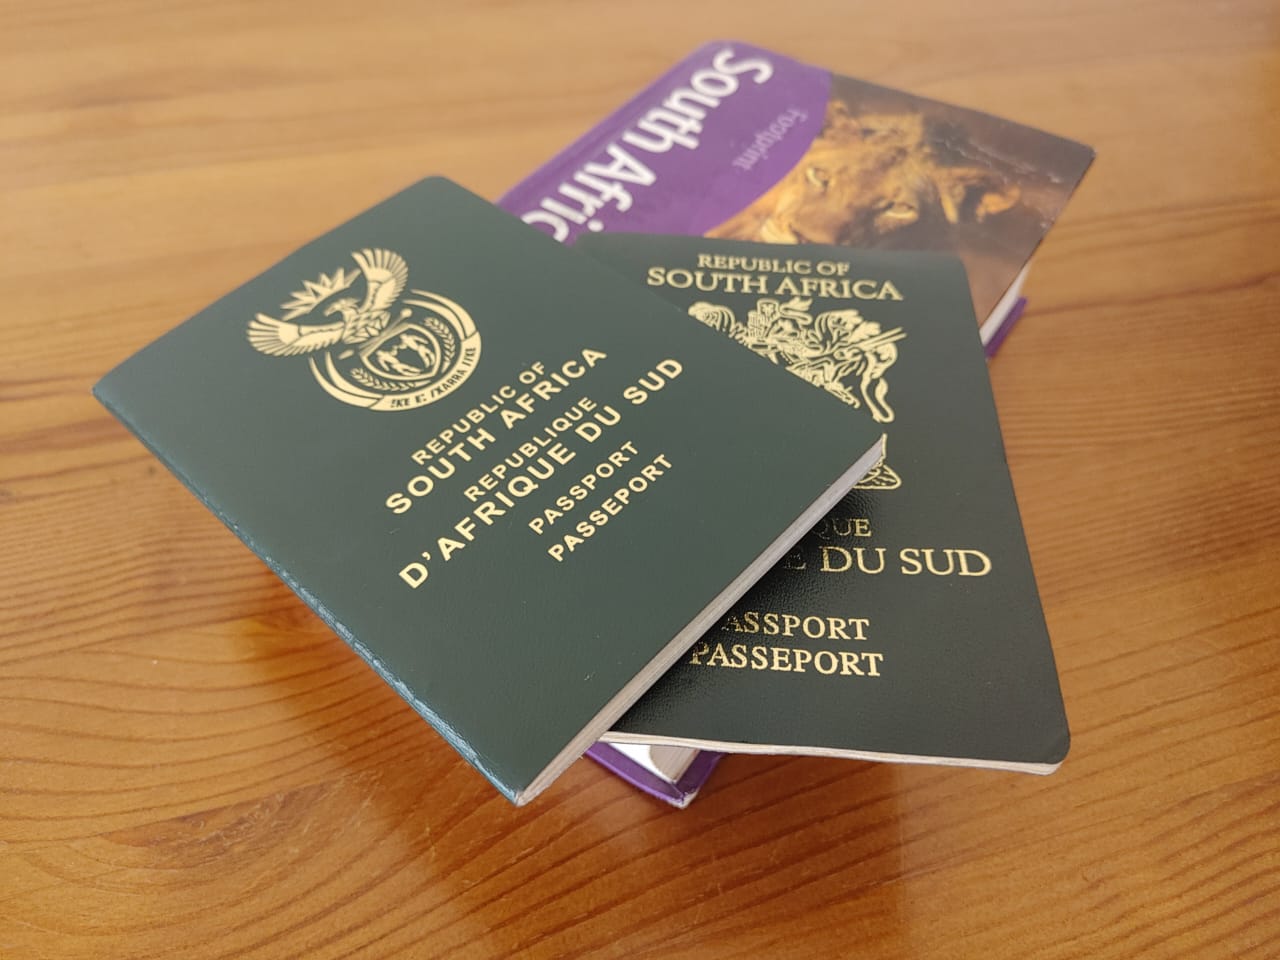 SA passport price to increase from November 2022